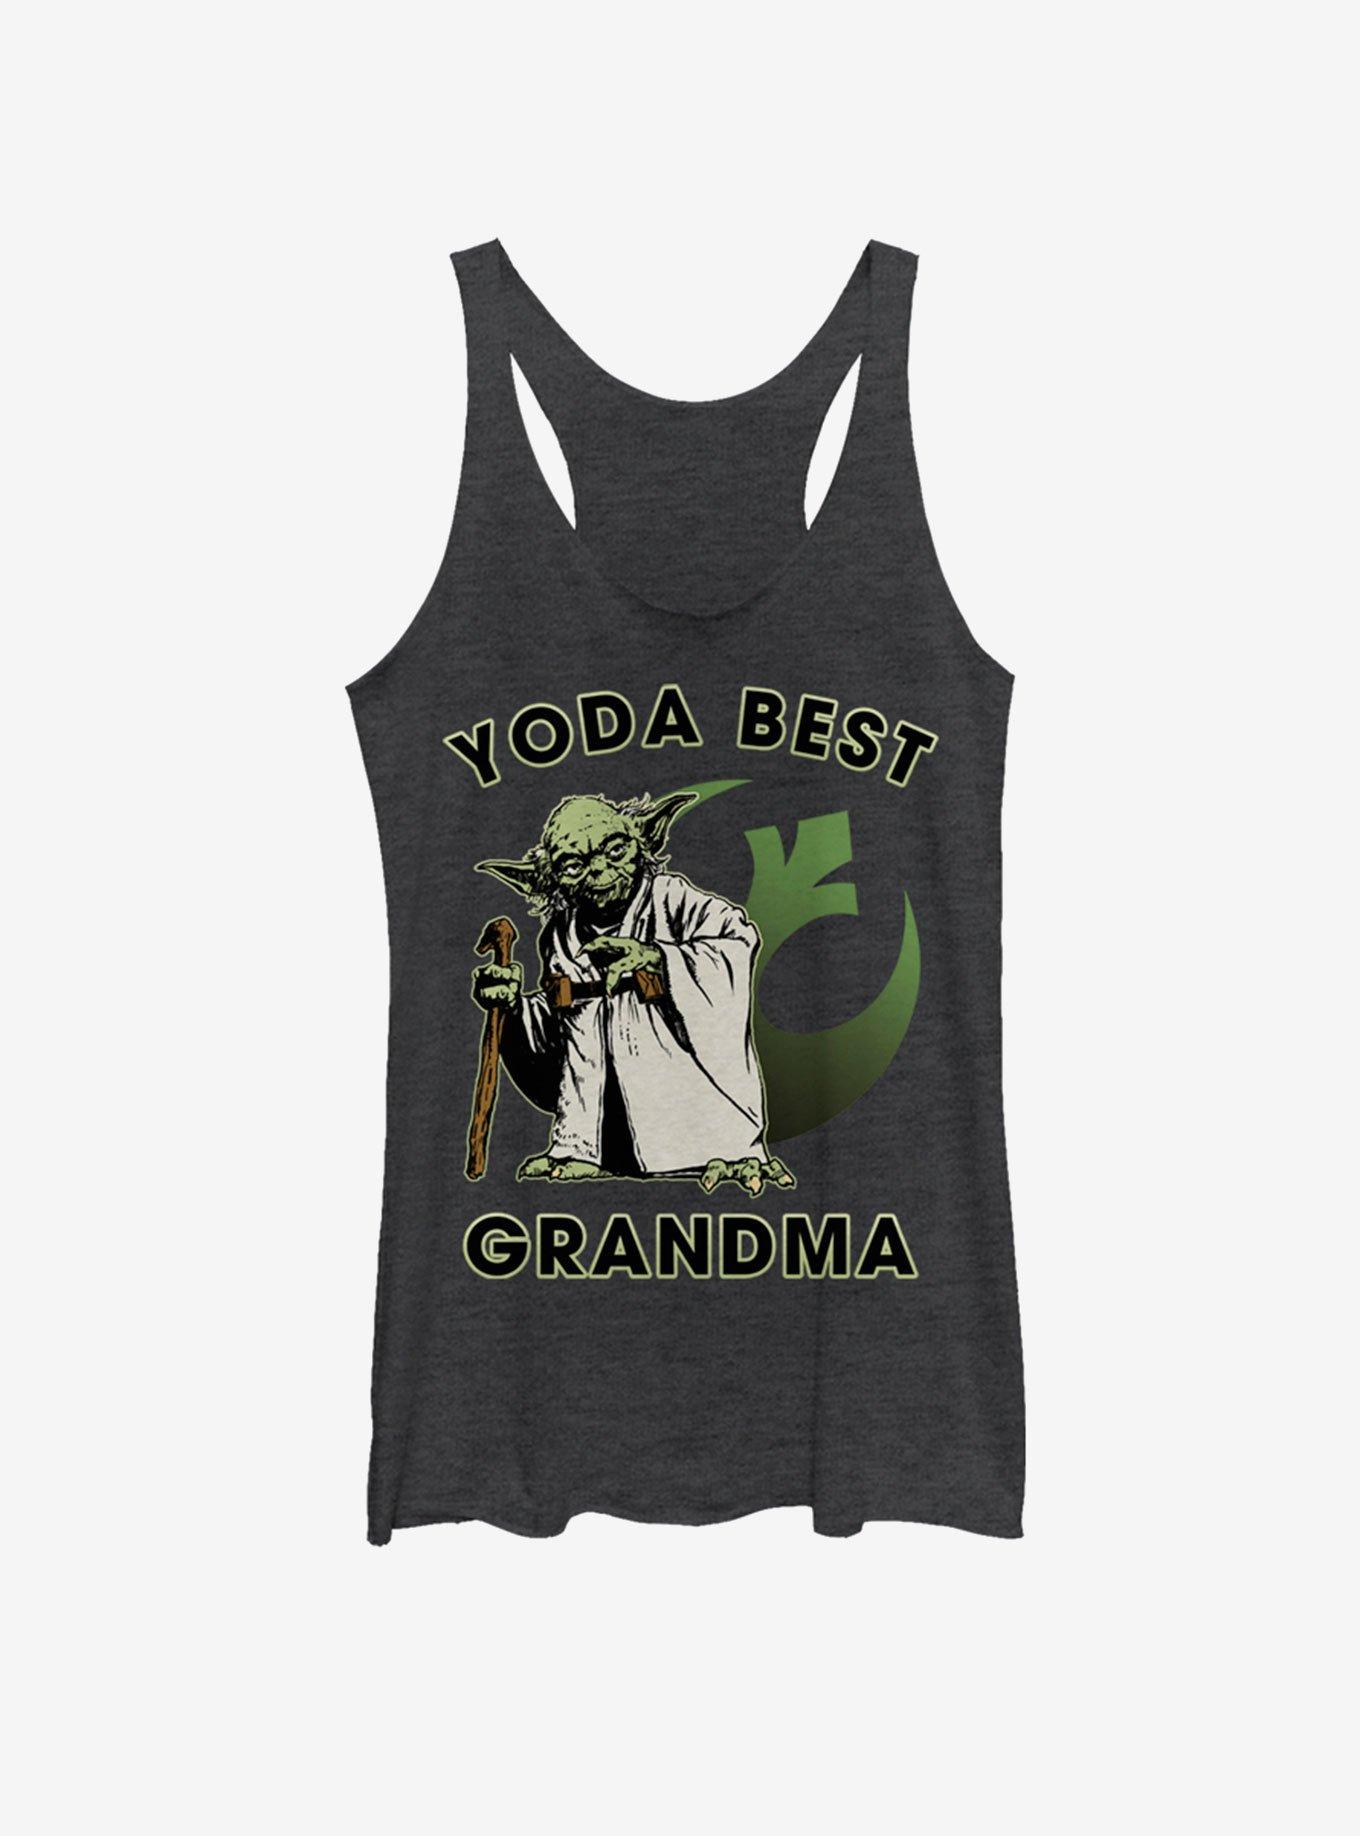 Star Wars Yoda Best Grandma Girls Tank